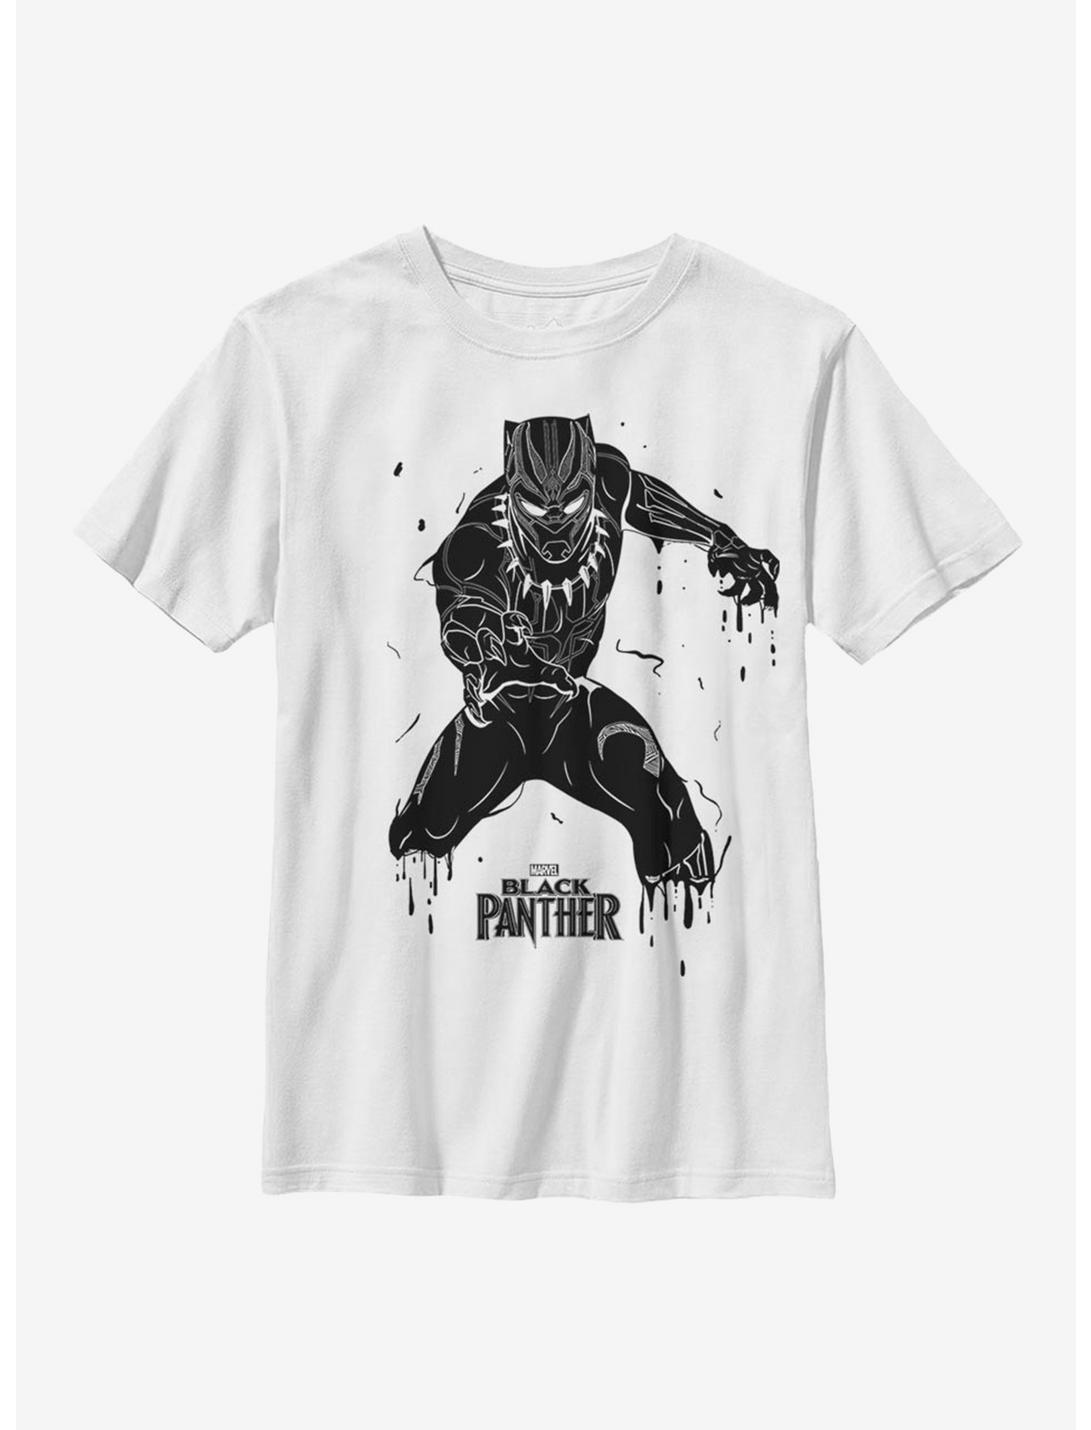 Marvel Black Panther Splatter Art Youth T-Shirt, WHITE, hi-res